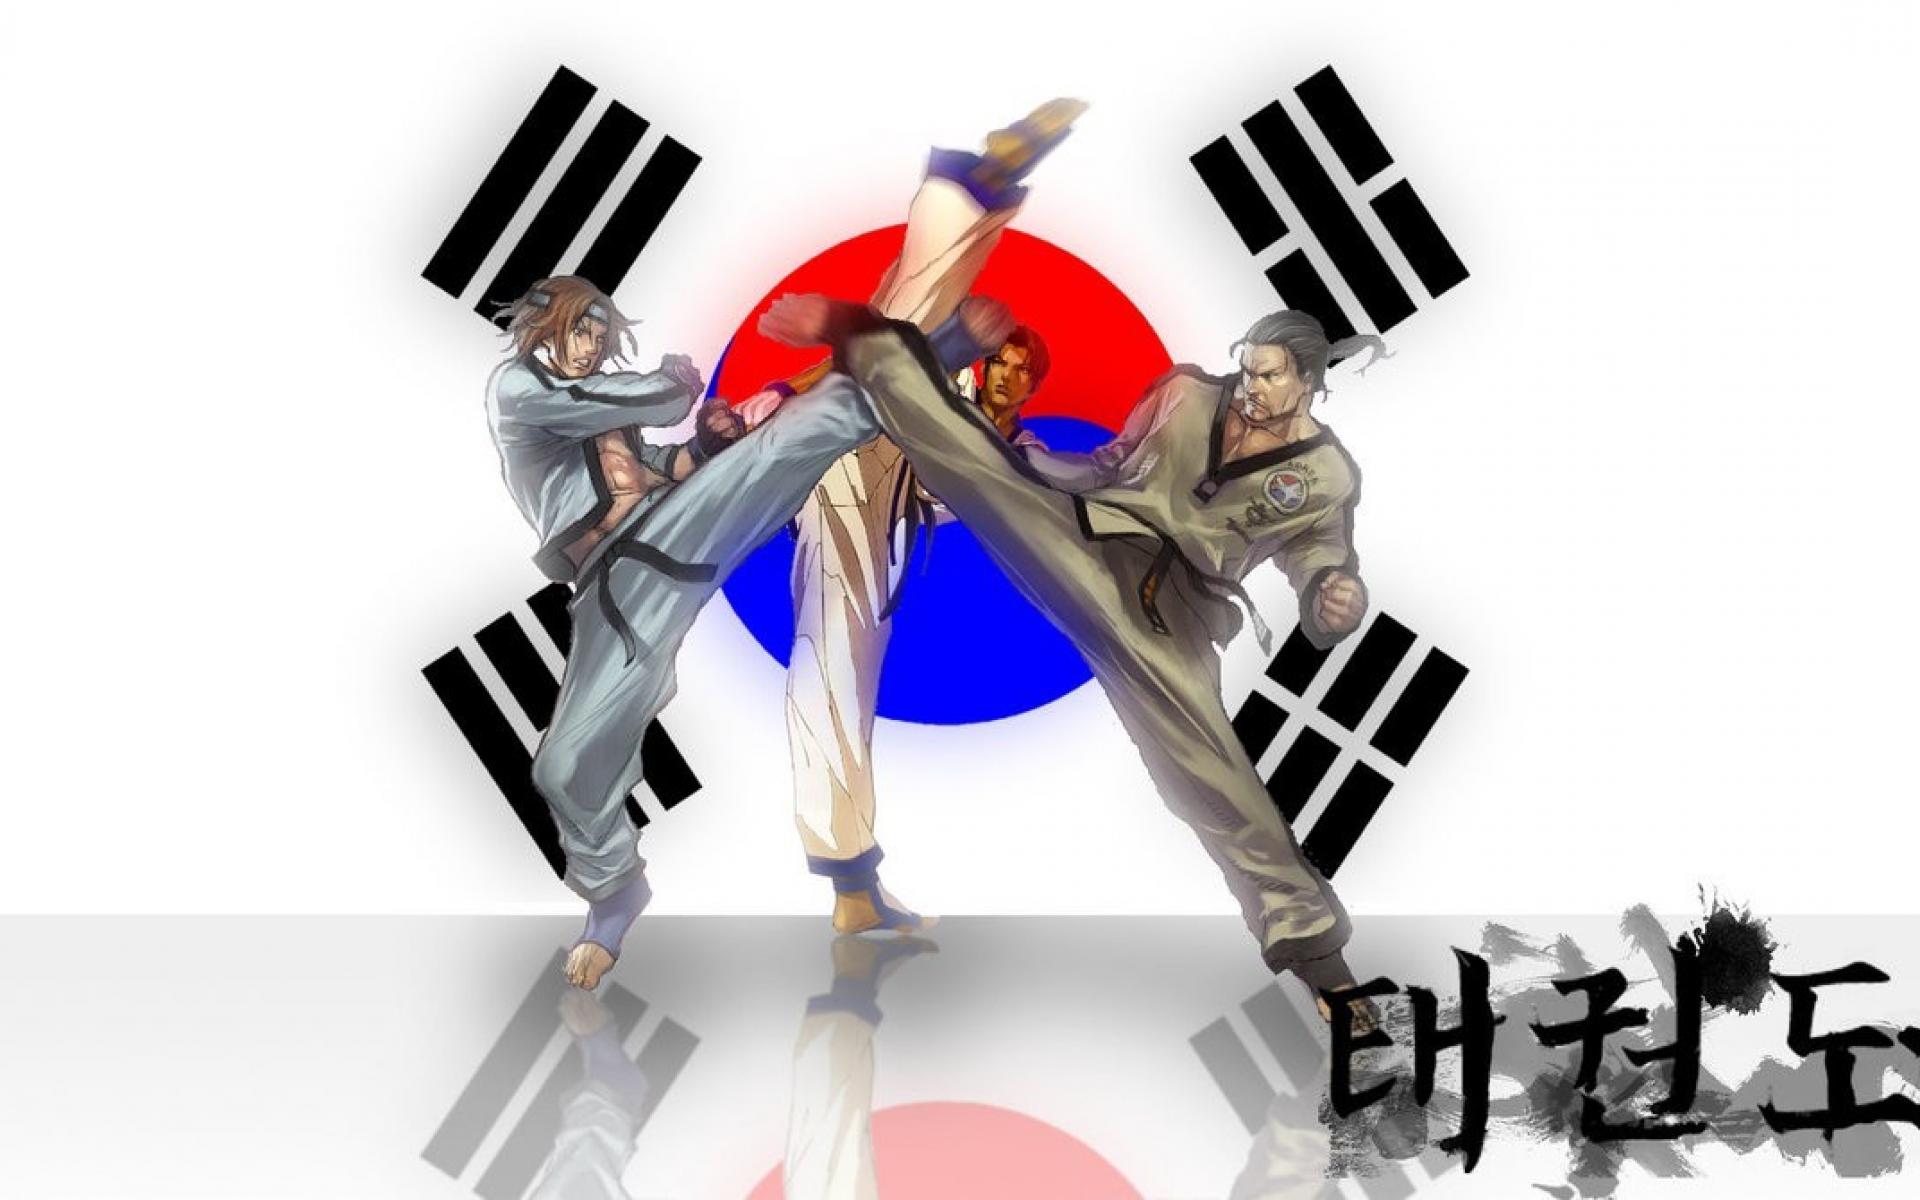 taekwondo wallpaper android,graphic design,illustration,graphics,art